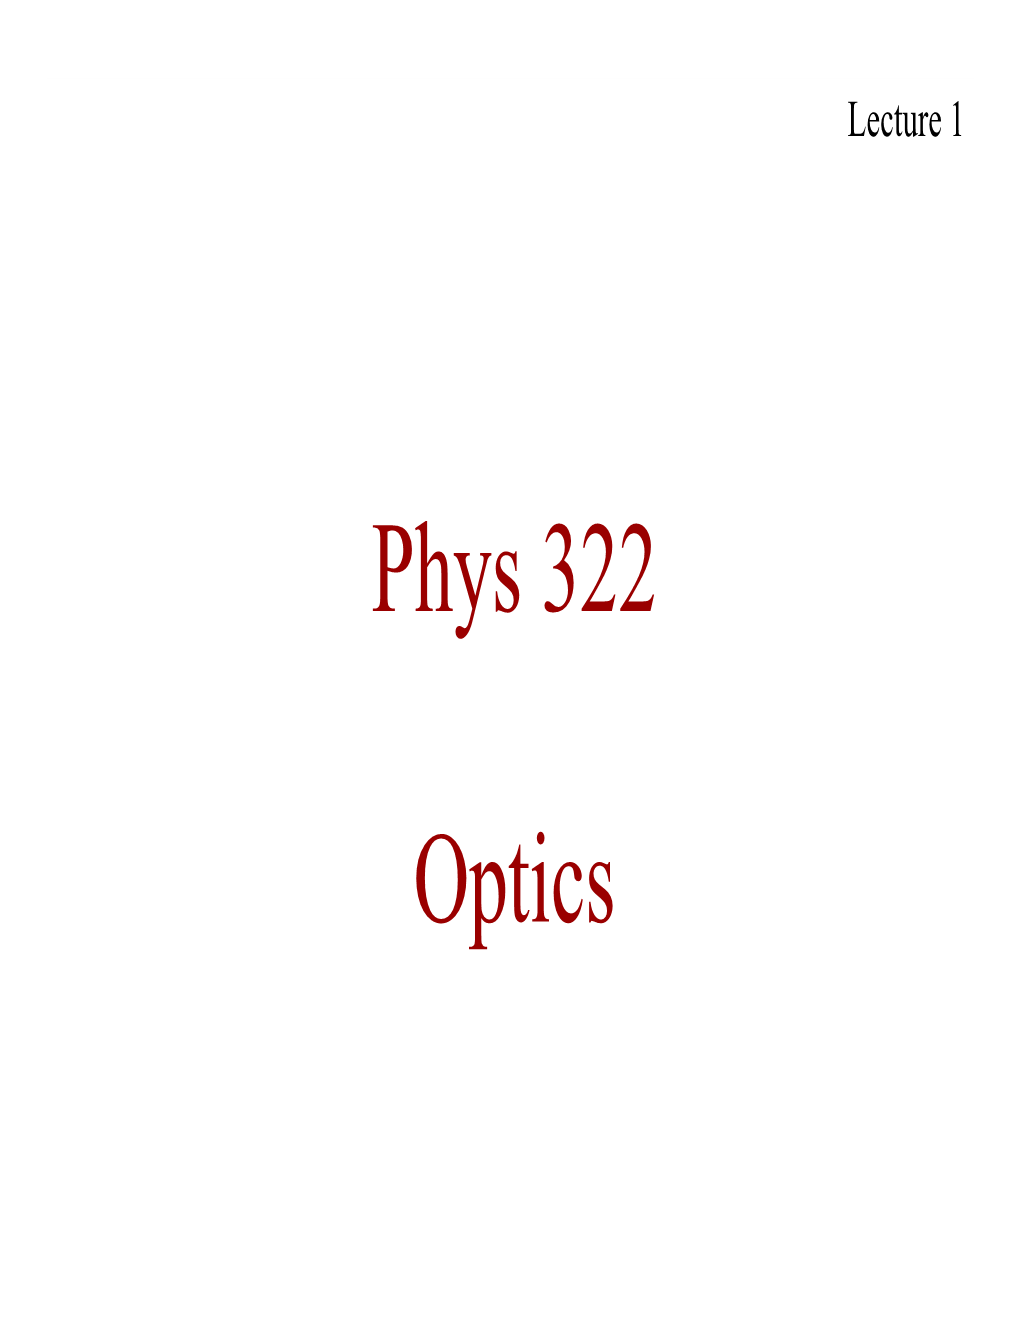 Phys 322 Optics